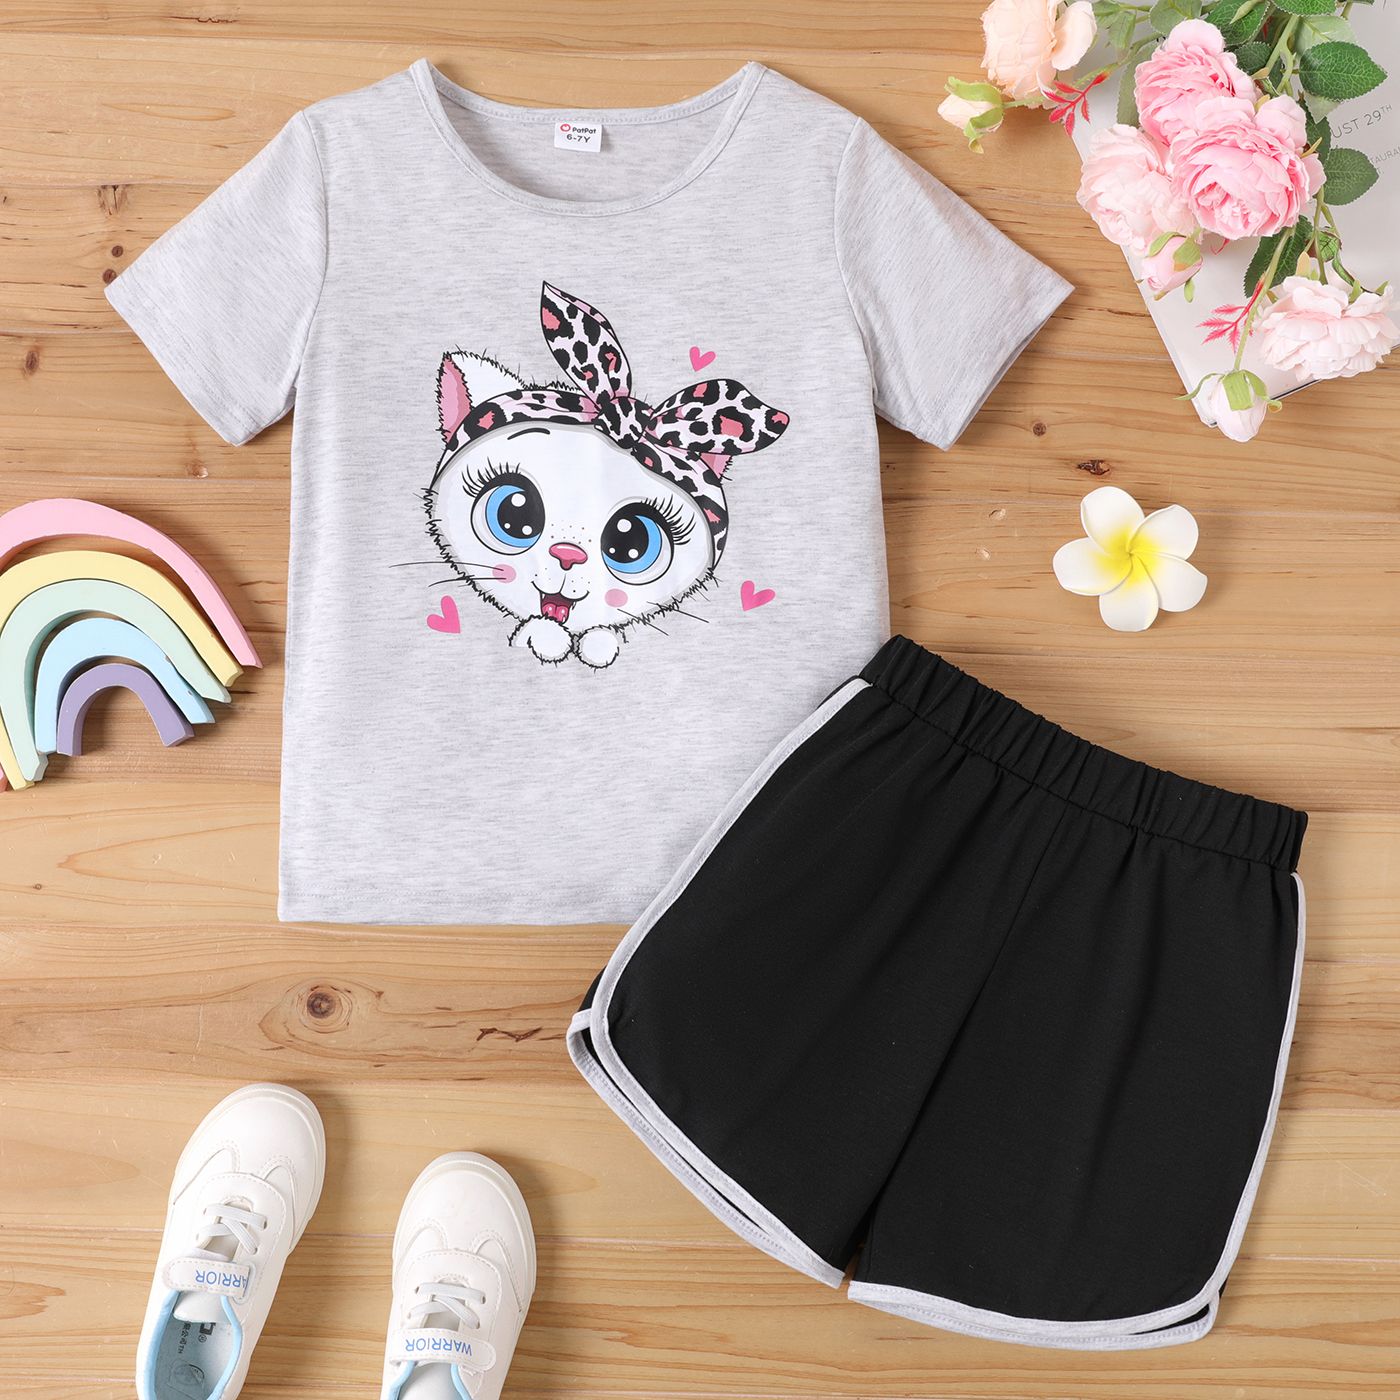 2pcs Kid Girl Cute Cat Print Short-sleeve Tee and Dolphin Shorts Set